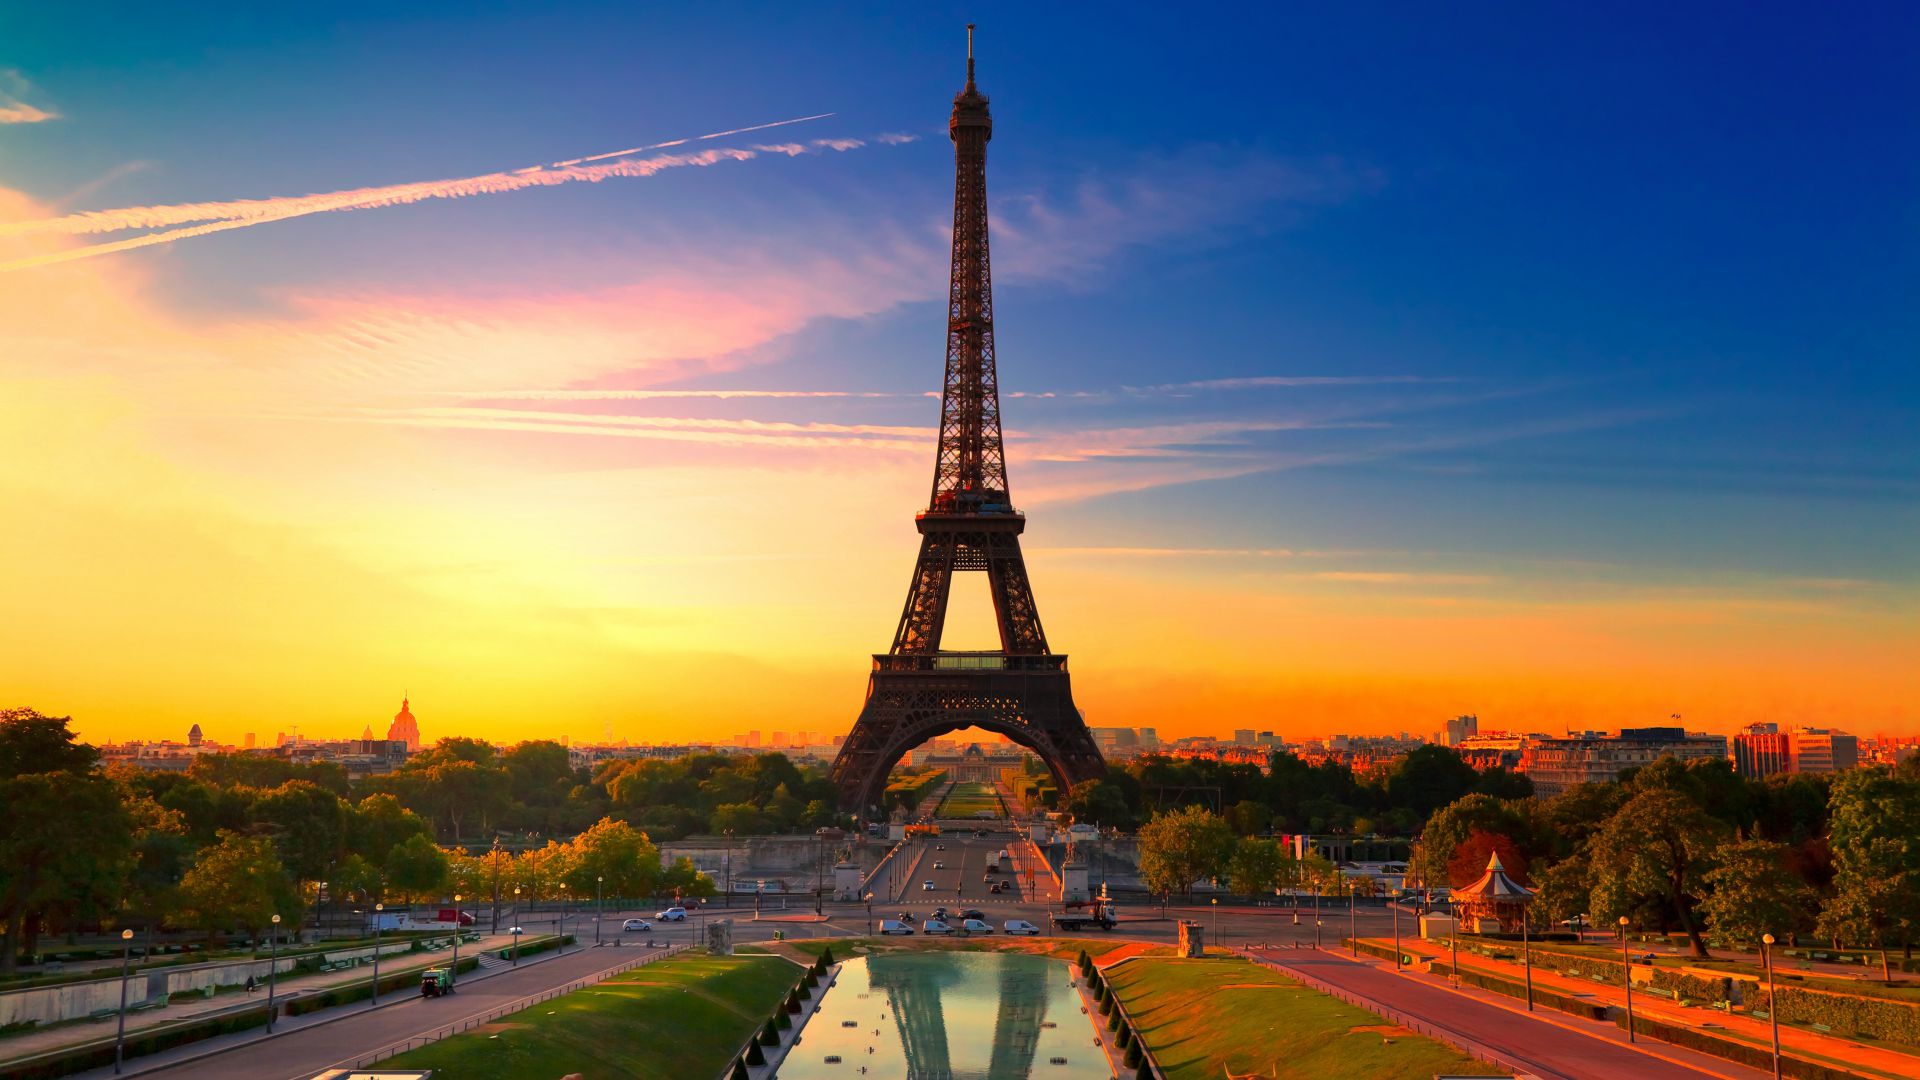 Эйфелева башня, Париж, Франция, Туризм, Путешествие, Eiffel Tower, Paris, France, Tourism, Travel (horizontal)